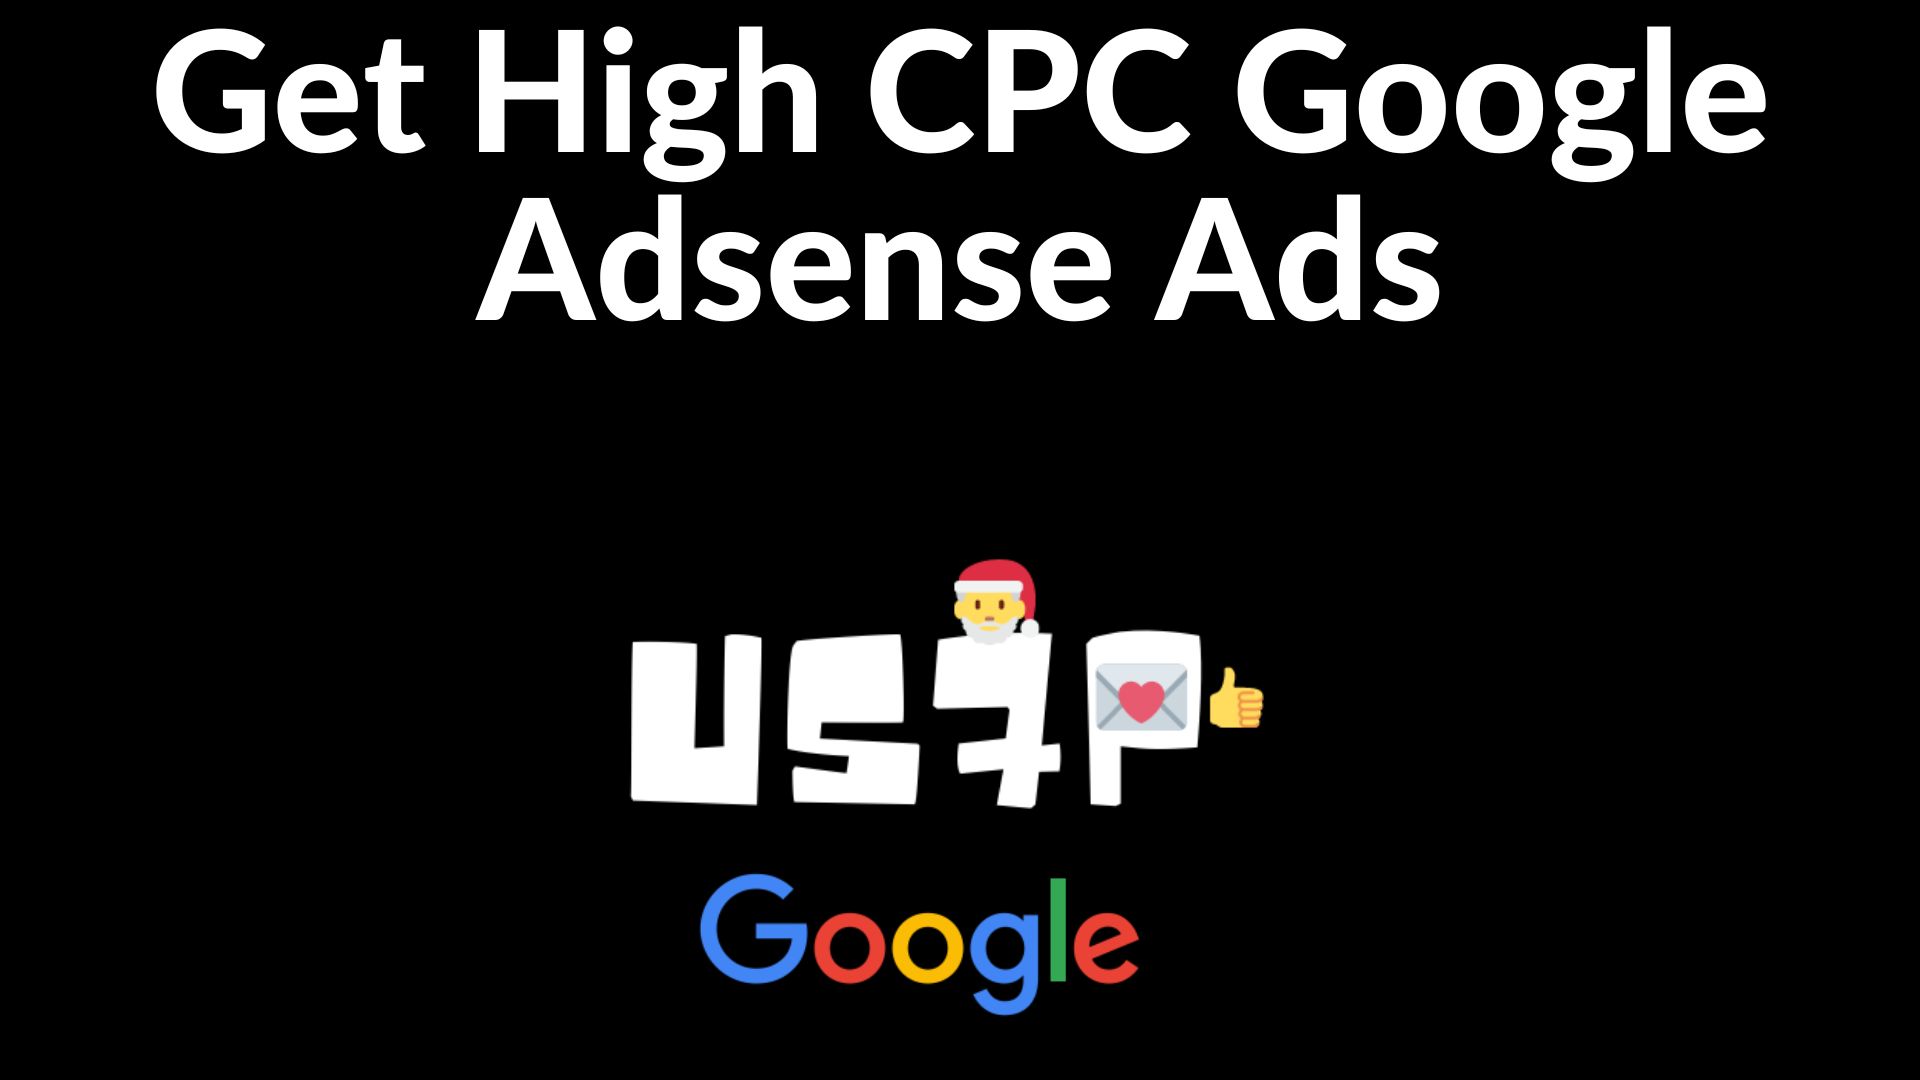 Get high cpc google adsense ads